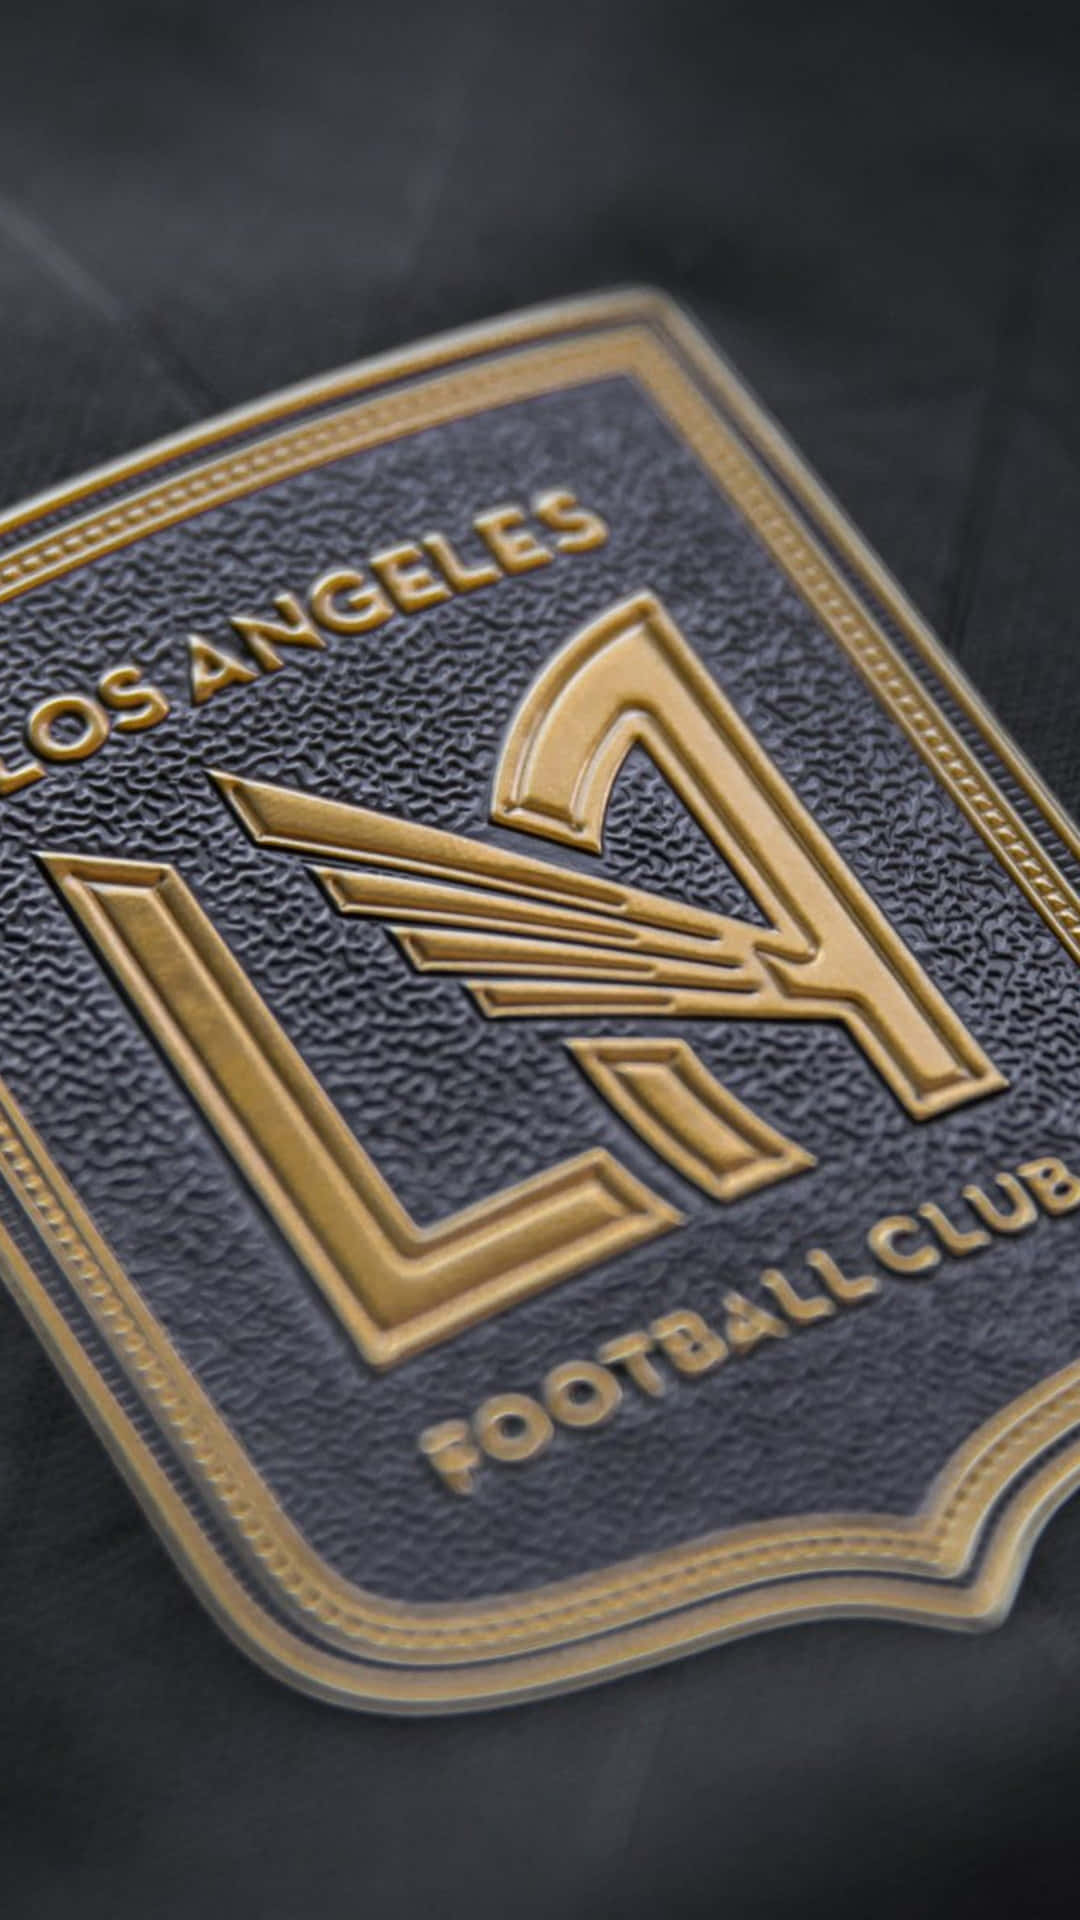 Download Los Angeles FC Home Shirt Logo Design Wallpaper